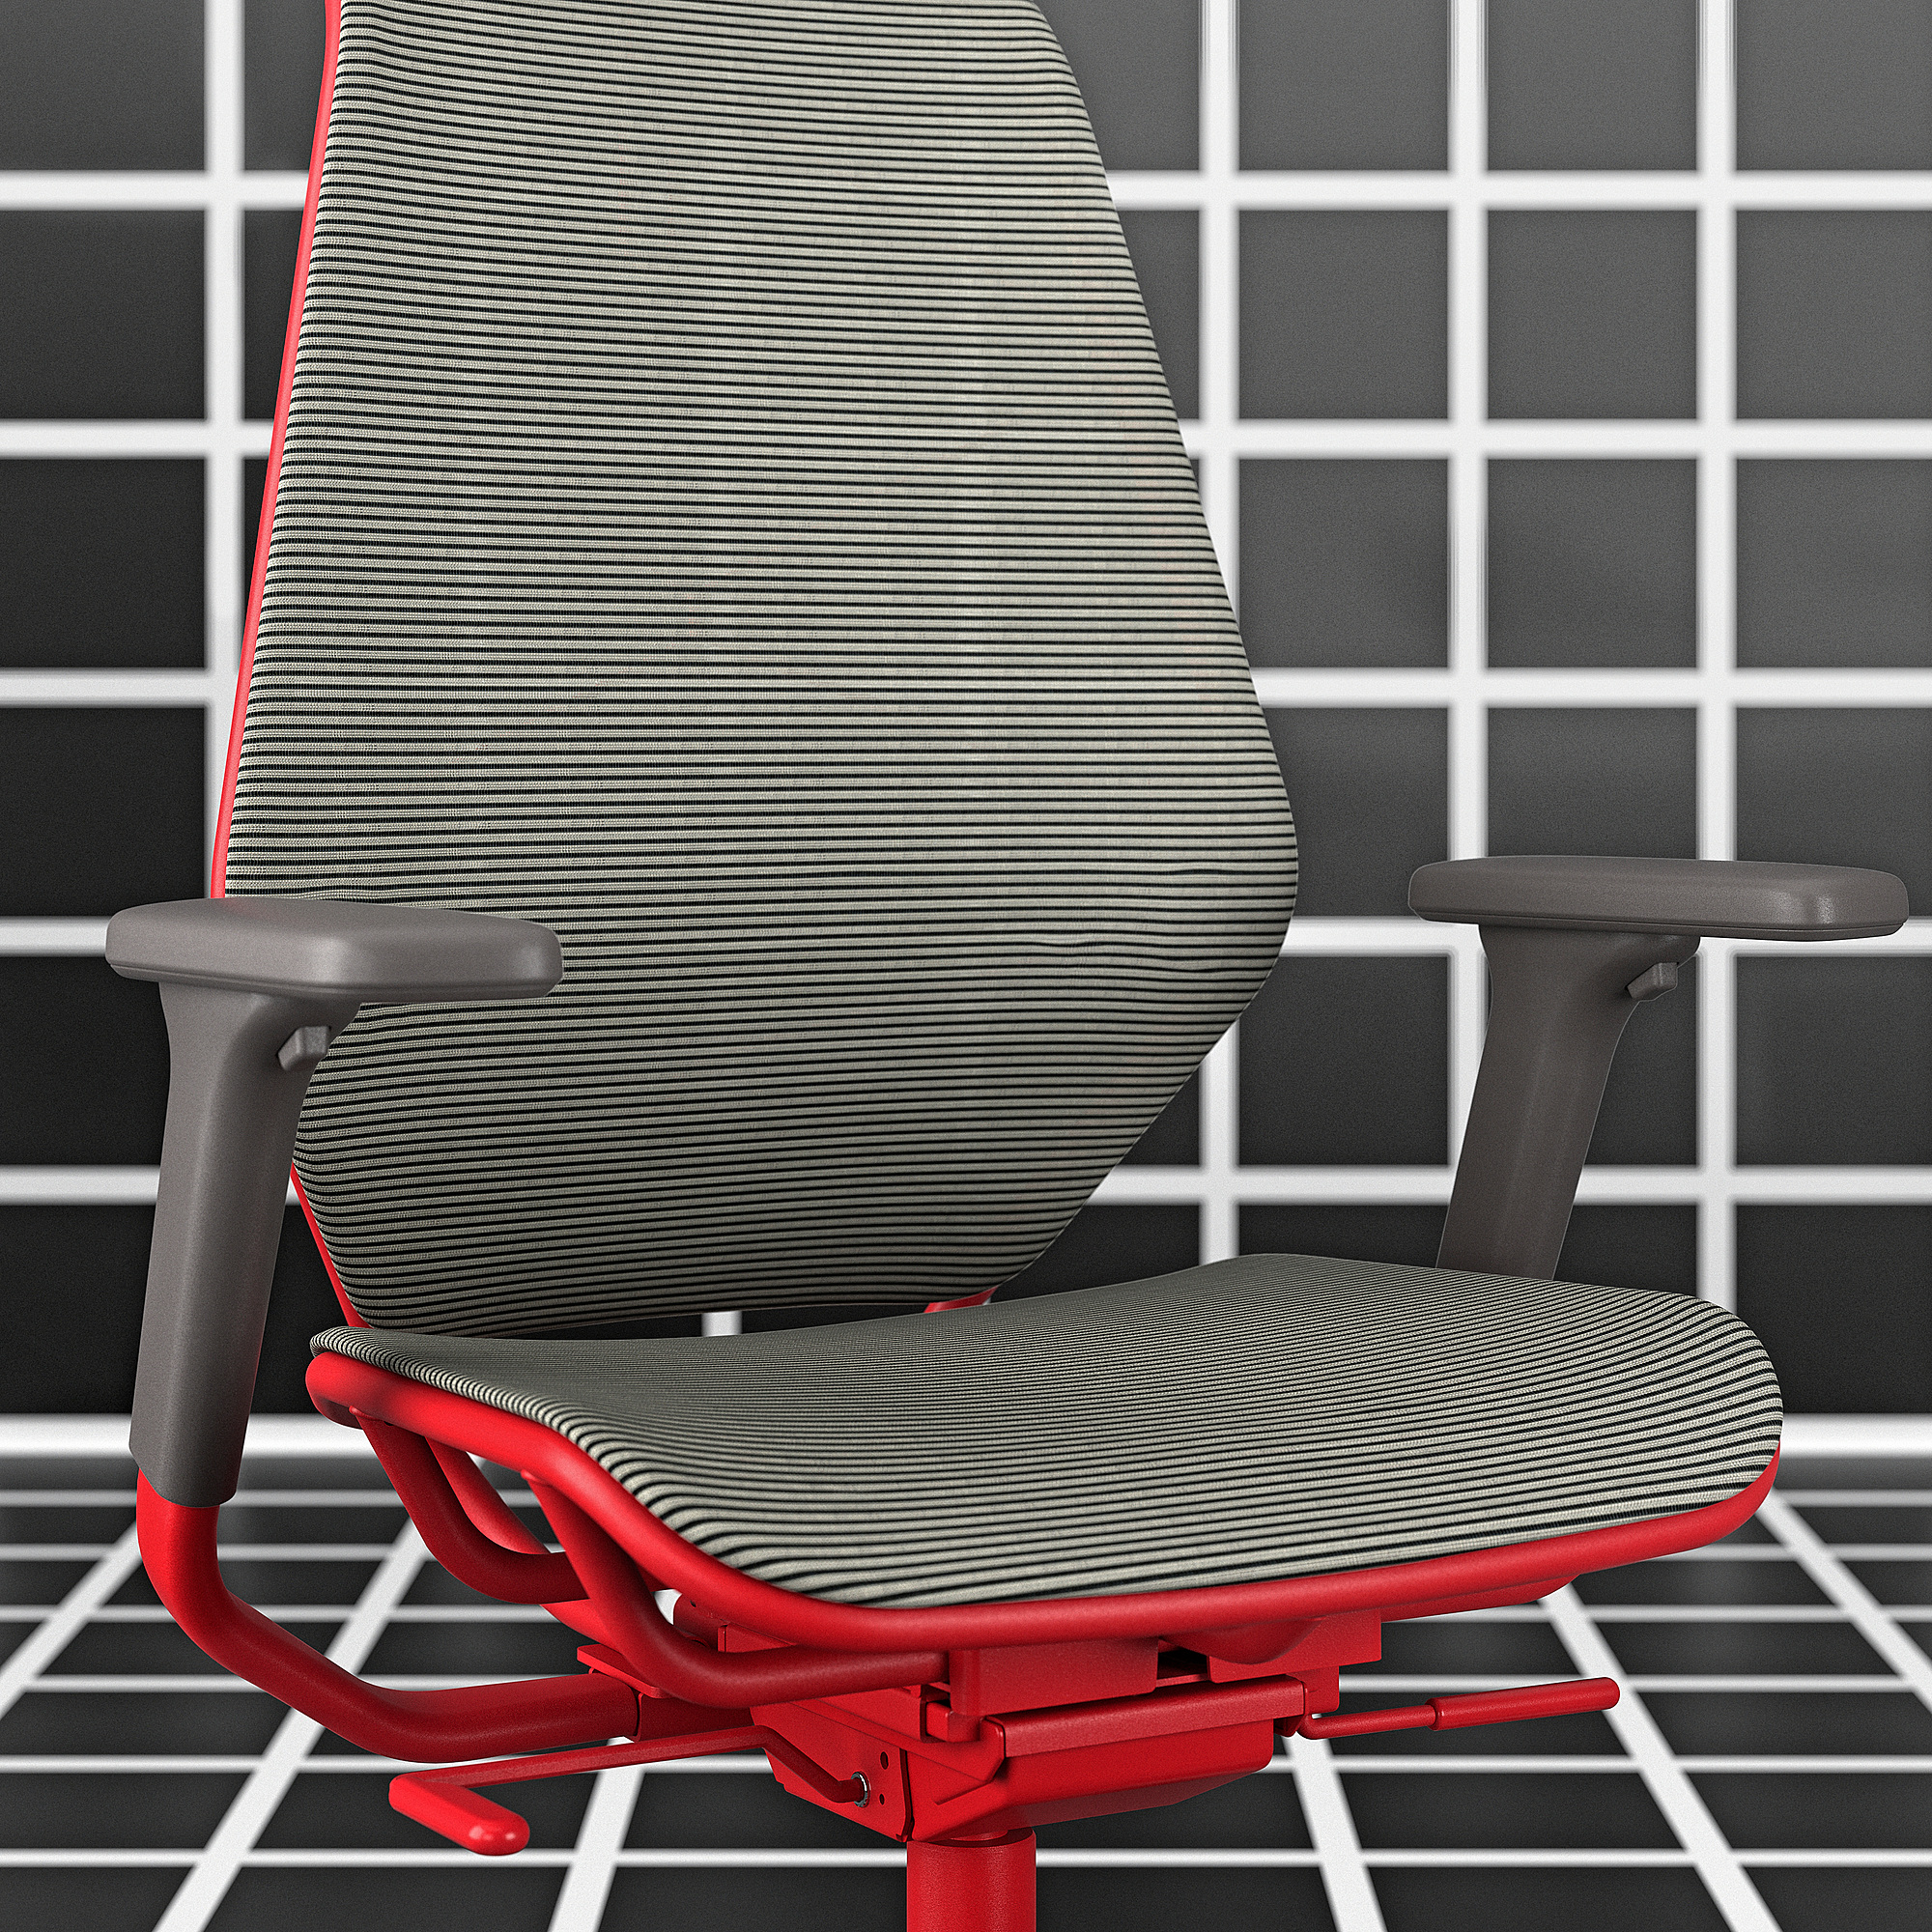 STYRSPEL gaming chair